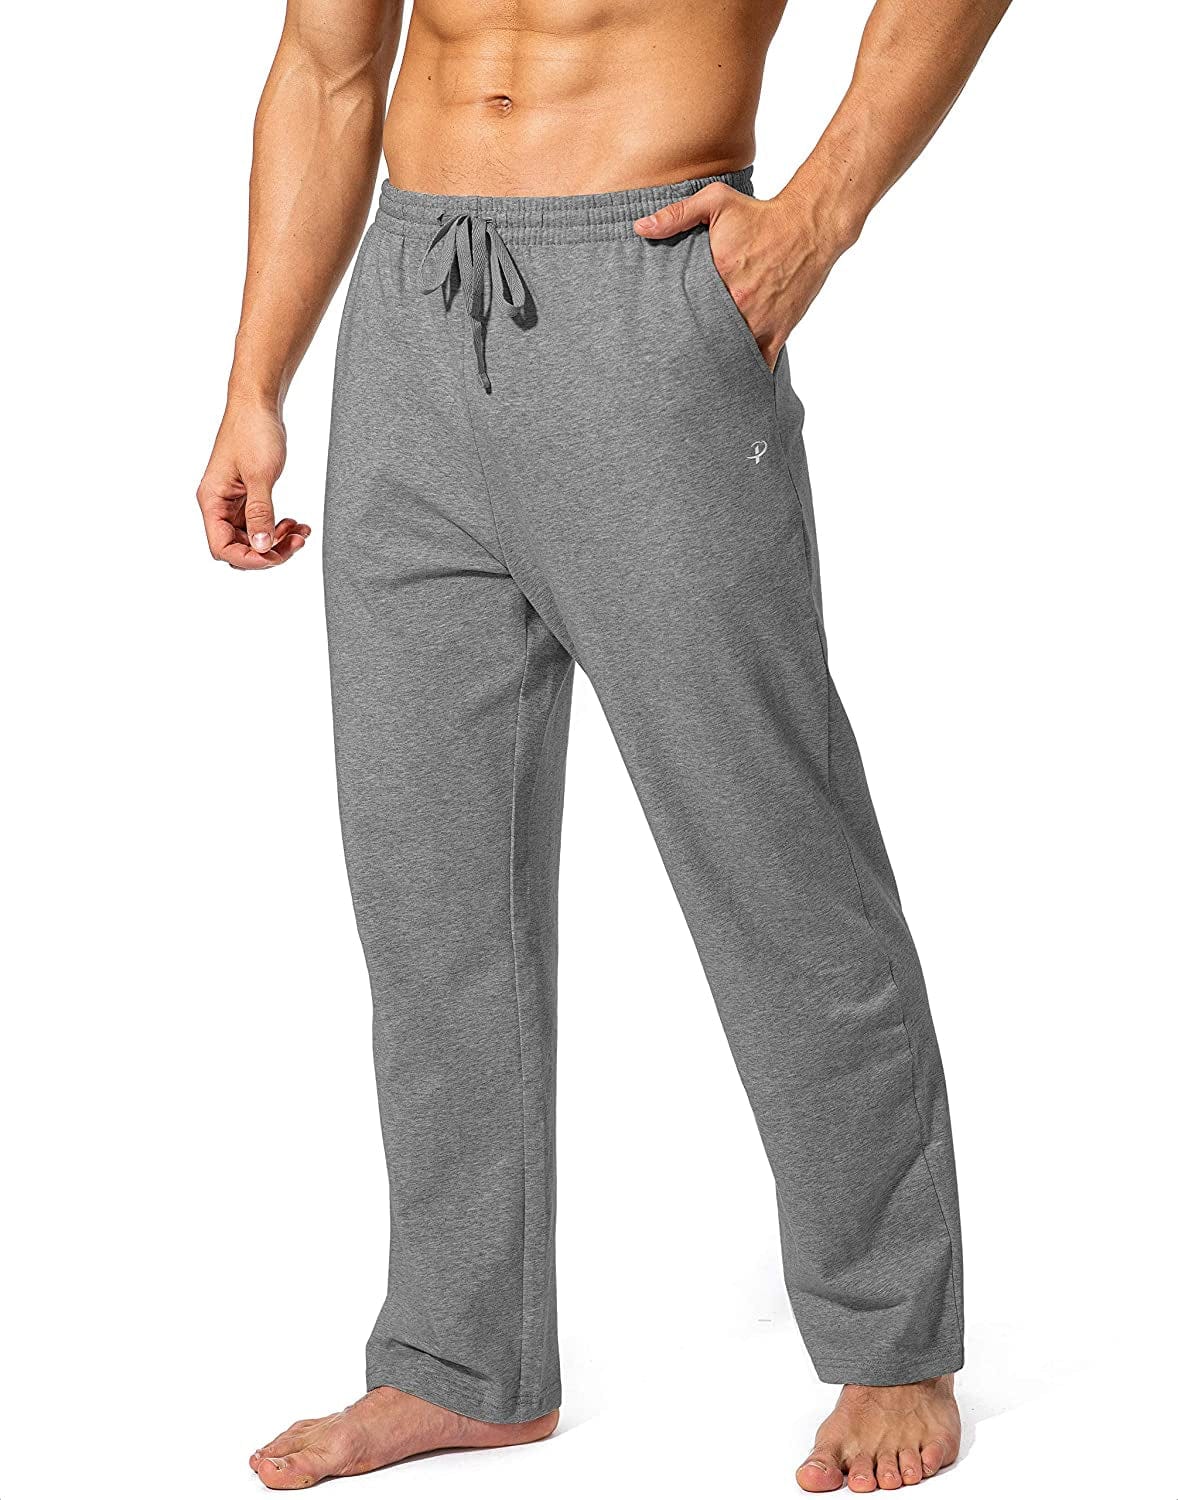 Comfy Stretchy 92% Cotton 8% Spandex Grey Leggings Size 3X Yoga/Gym/Workout